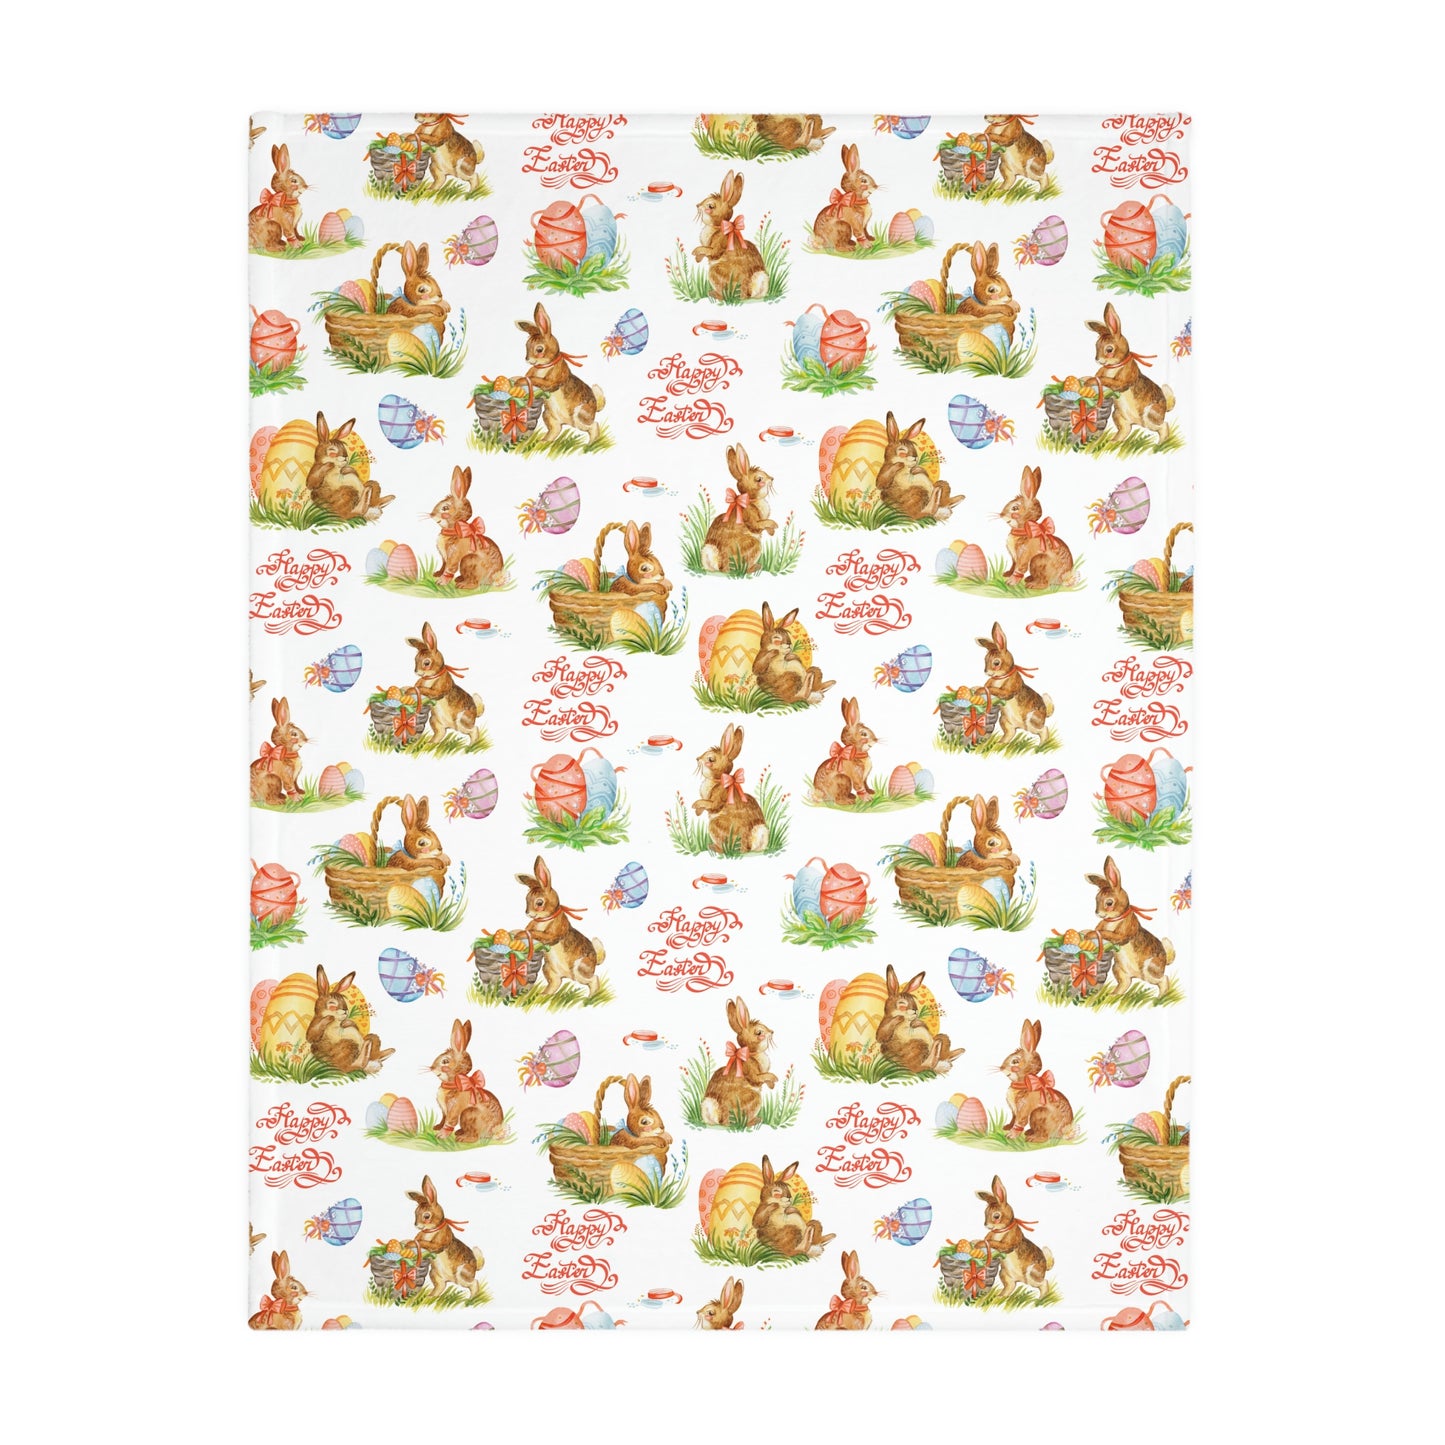 Easter Bunnies in Baskets Velveteen Minky Blanket (Two-sided print)